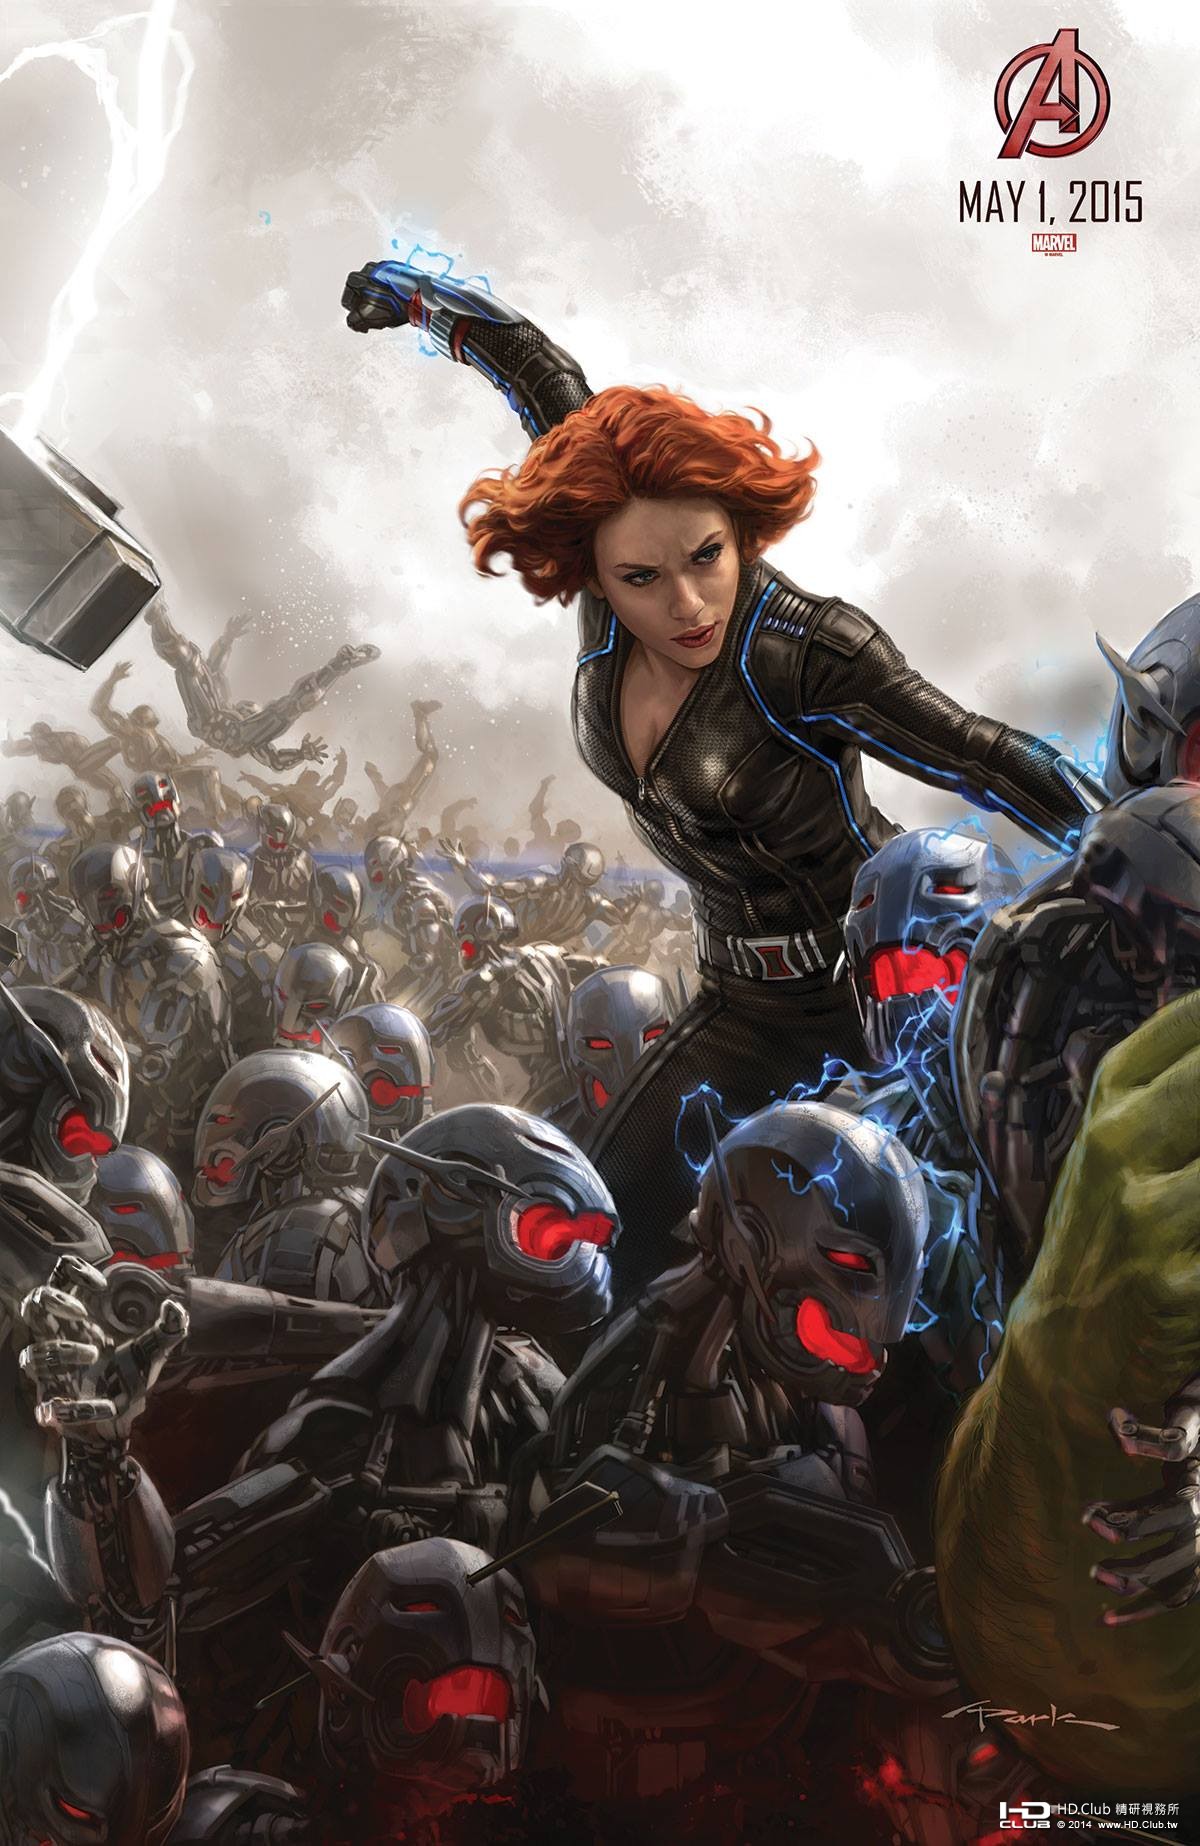 Avengers-Ages-of-Ultron-Comic-Con-Concept-Art-Black-Widow.jpg